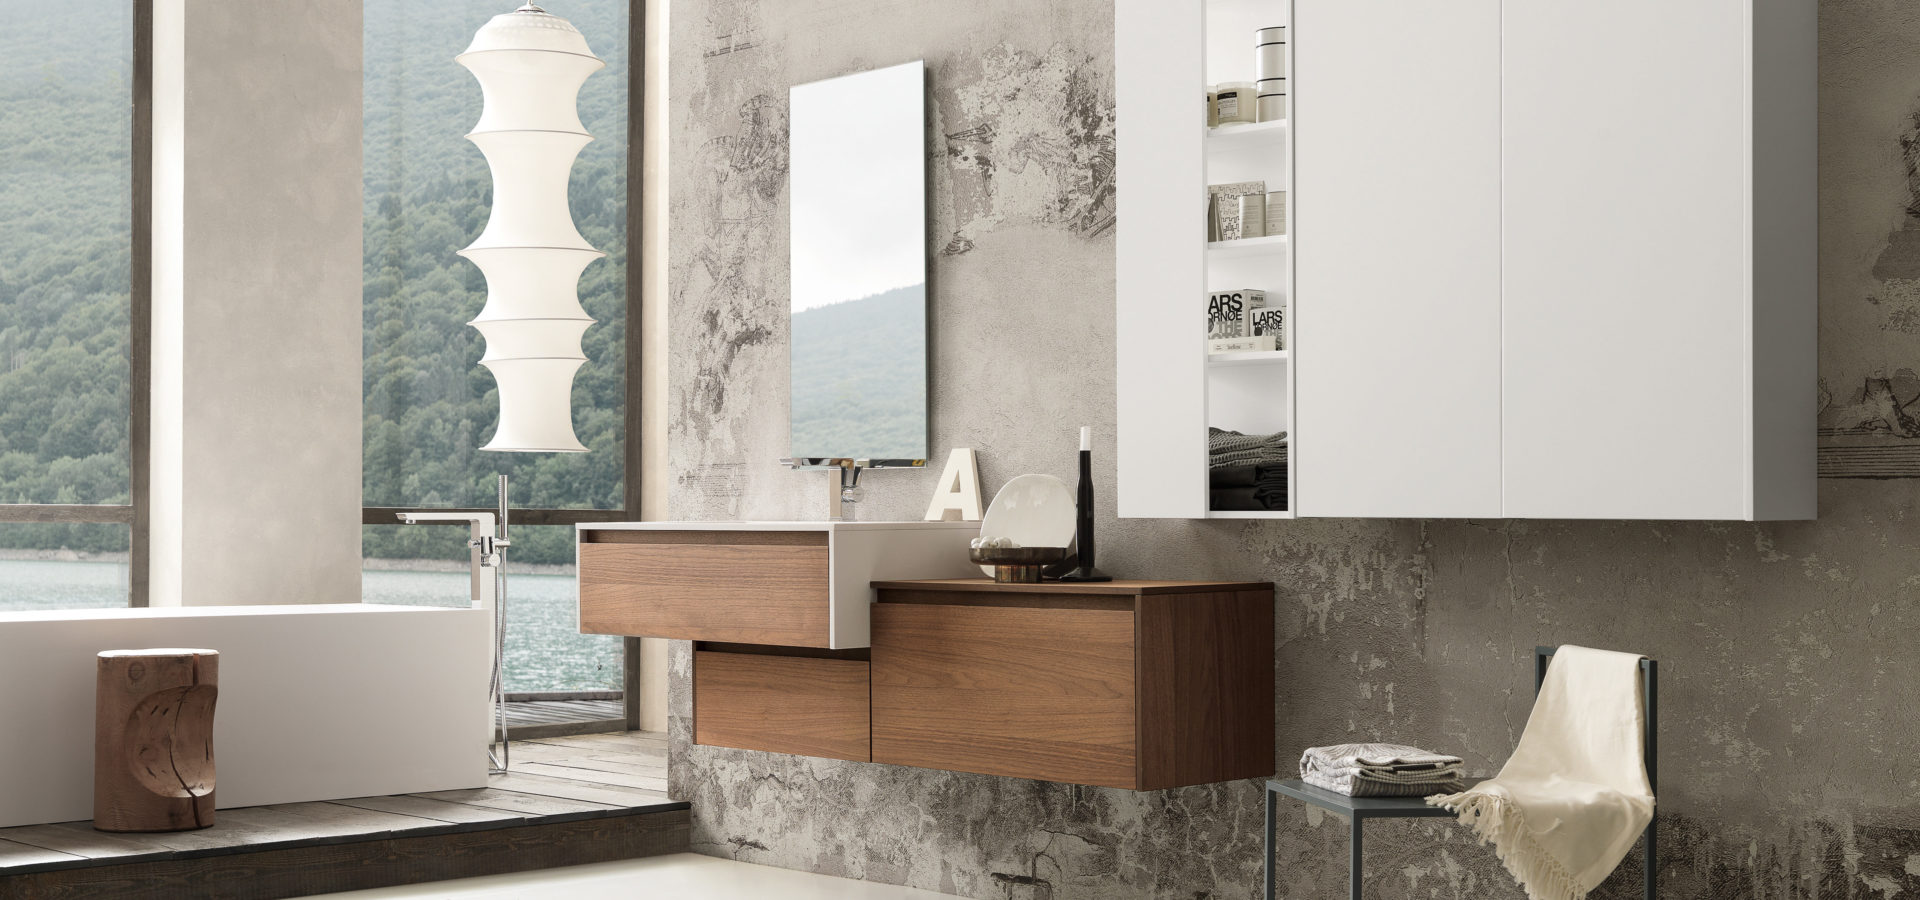 luxury bathroom vanity designs in miami